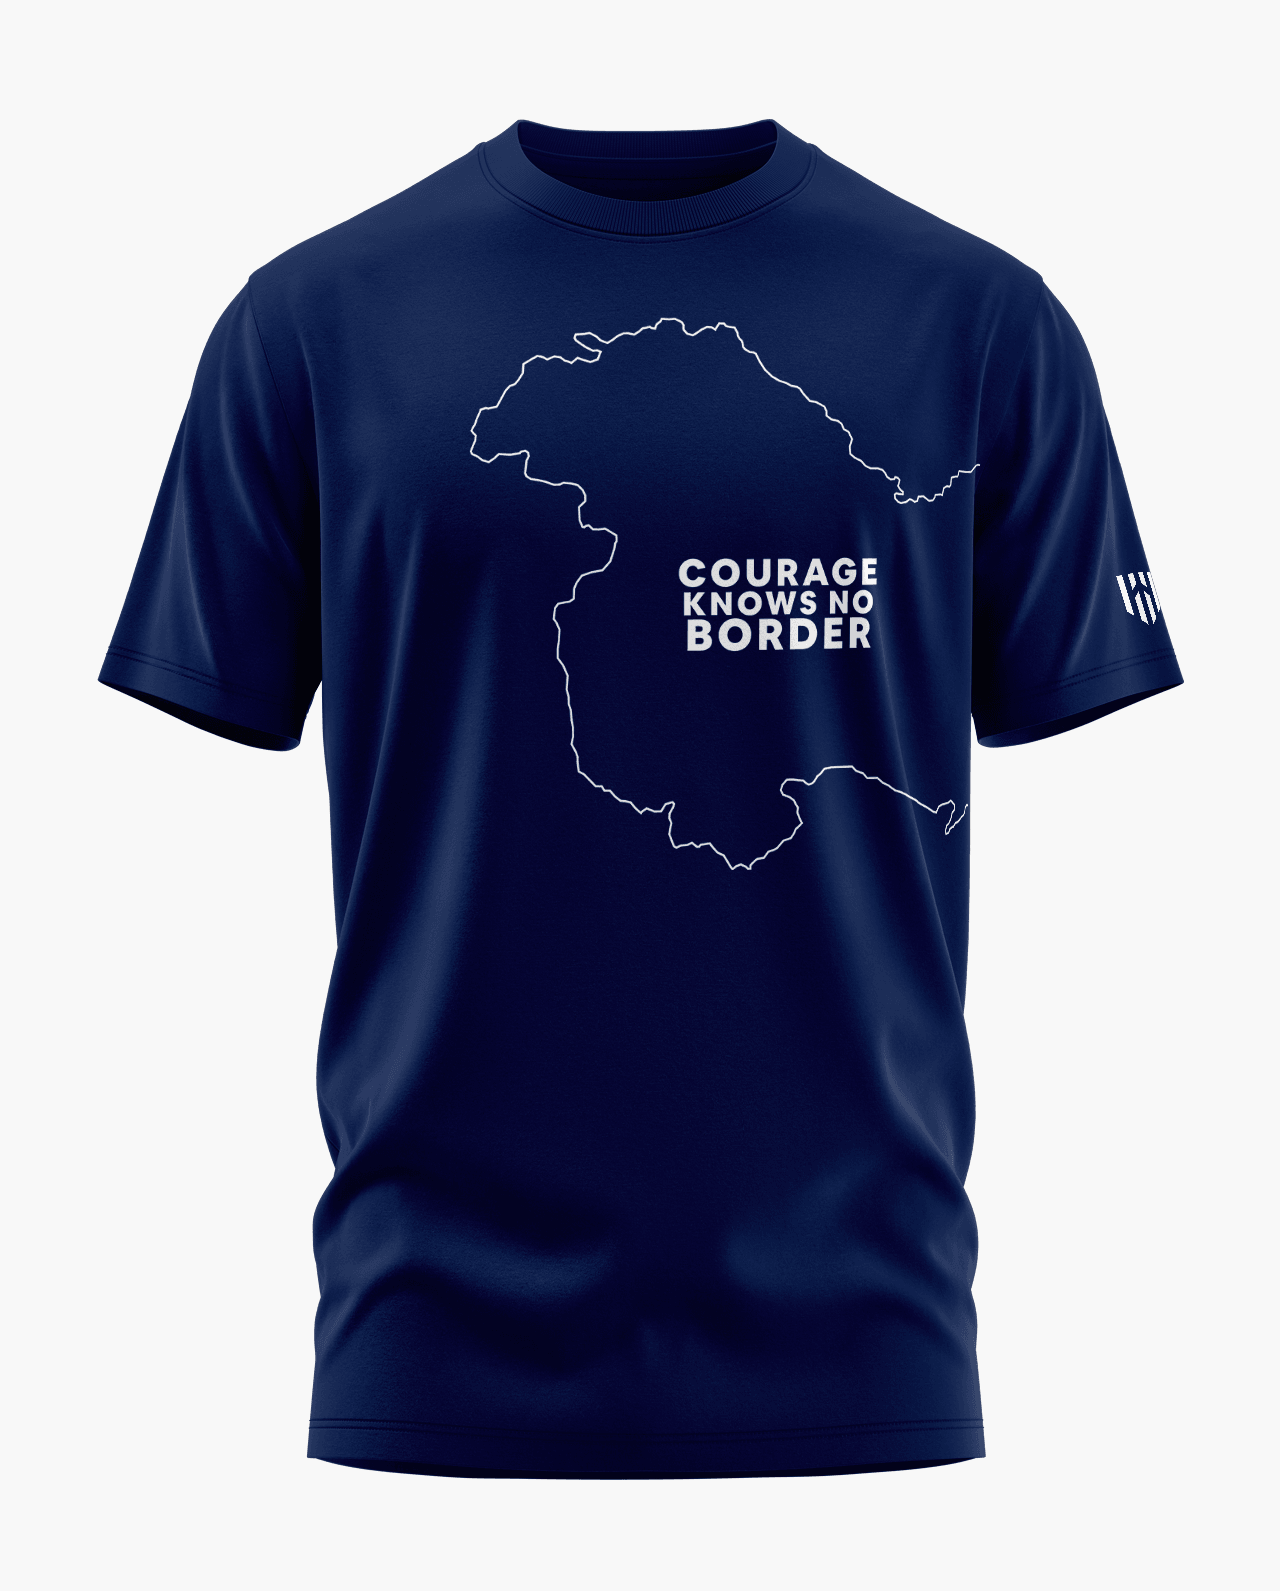 Courage knows no border text T-Shirt - Aero Armour